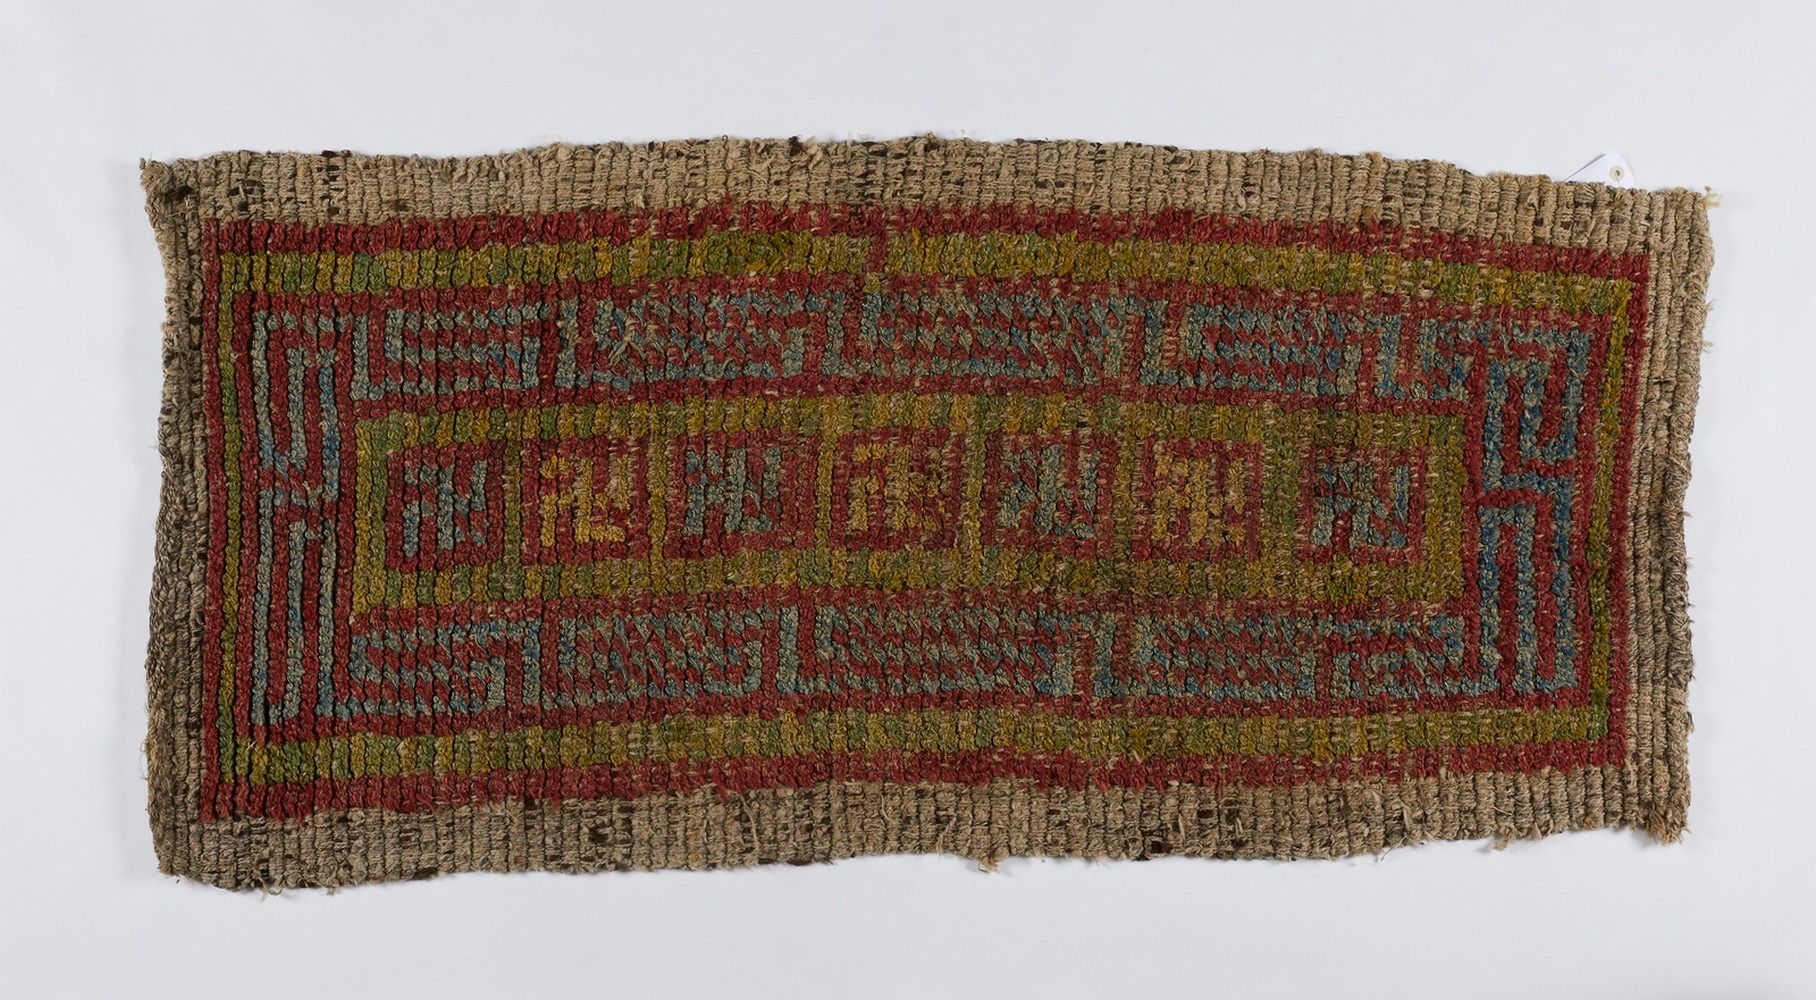 Chinese Art A rare Tibetan Wangden rug Arte chino. Una rara alfombra tibetana Wa&hellip;